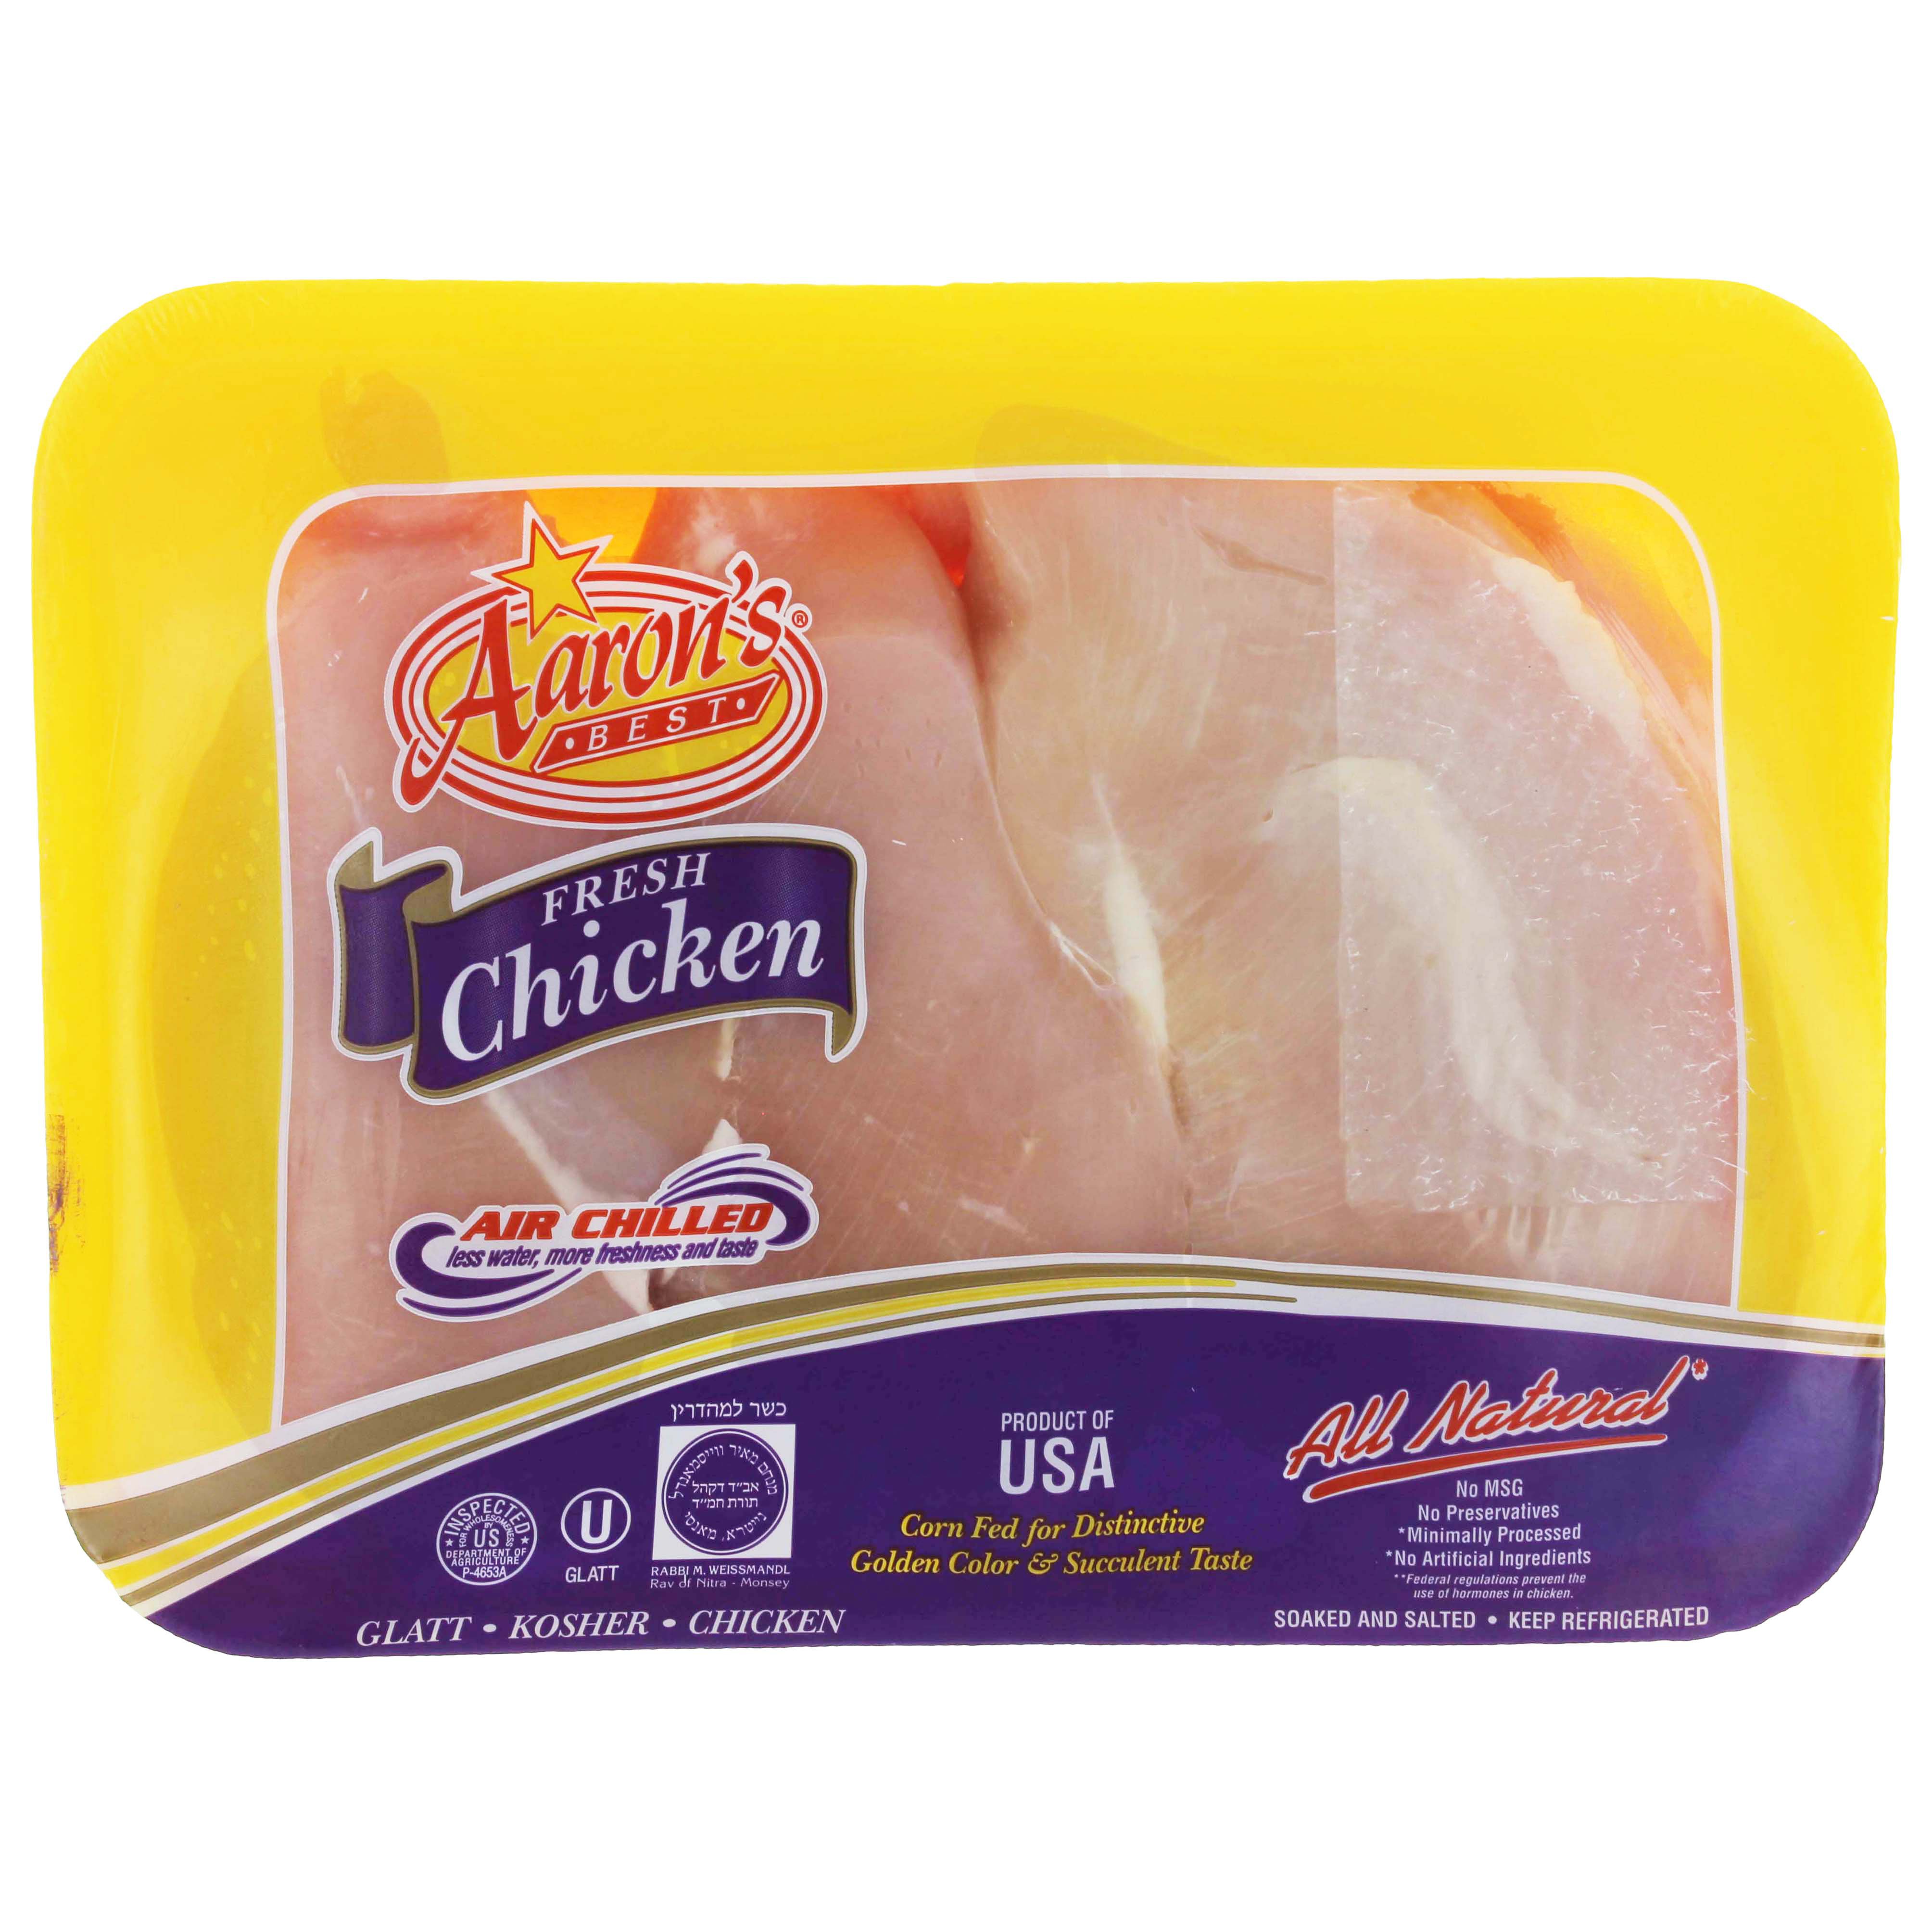 Kosher Chicken Breasts, Boneless/Skinless (Cutlets), ANTIBIOTIC